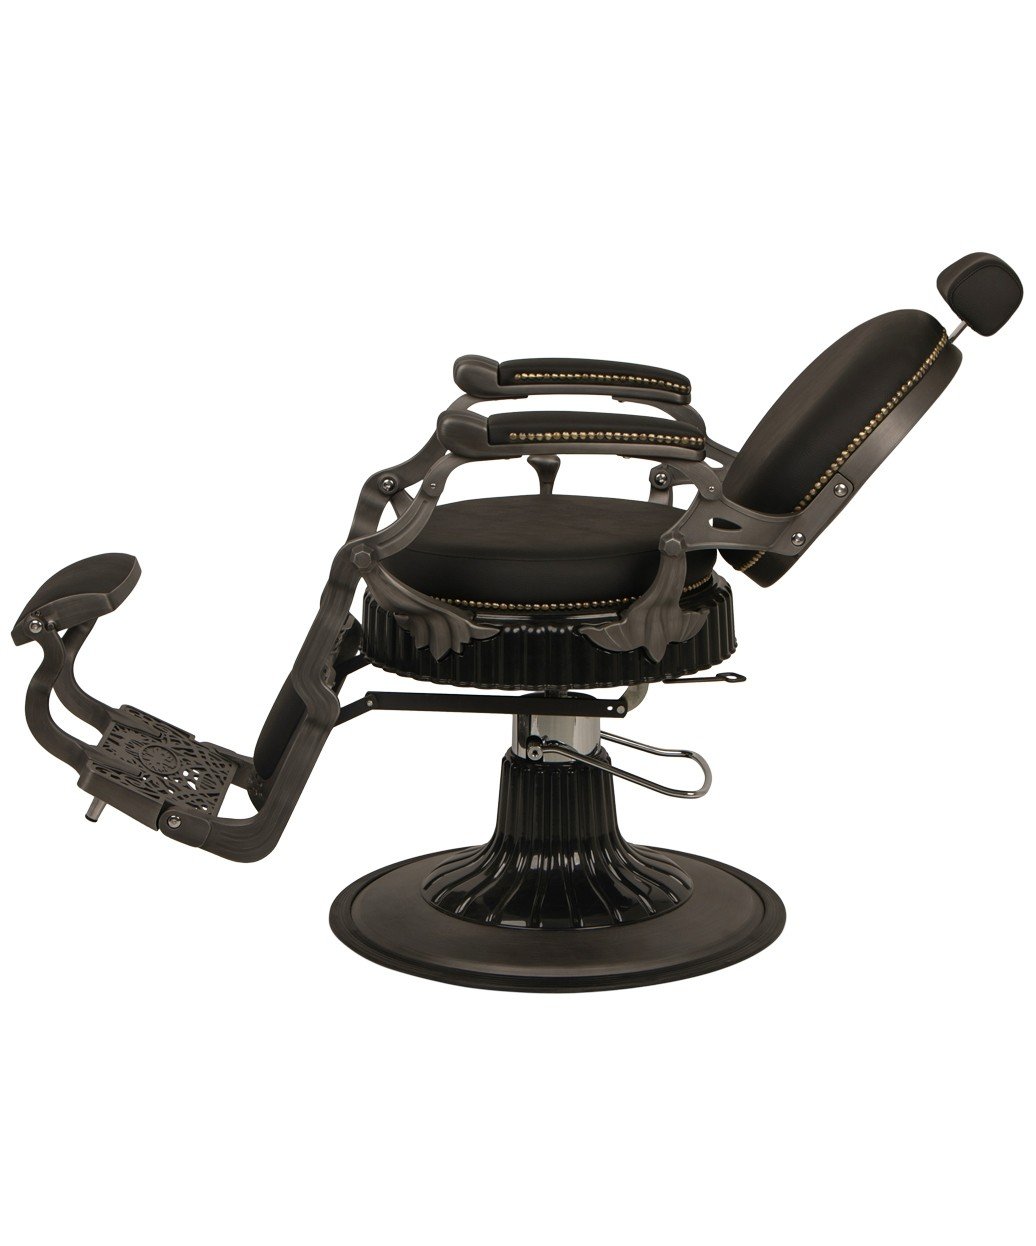 Regal Professional Barber Chair